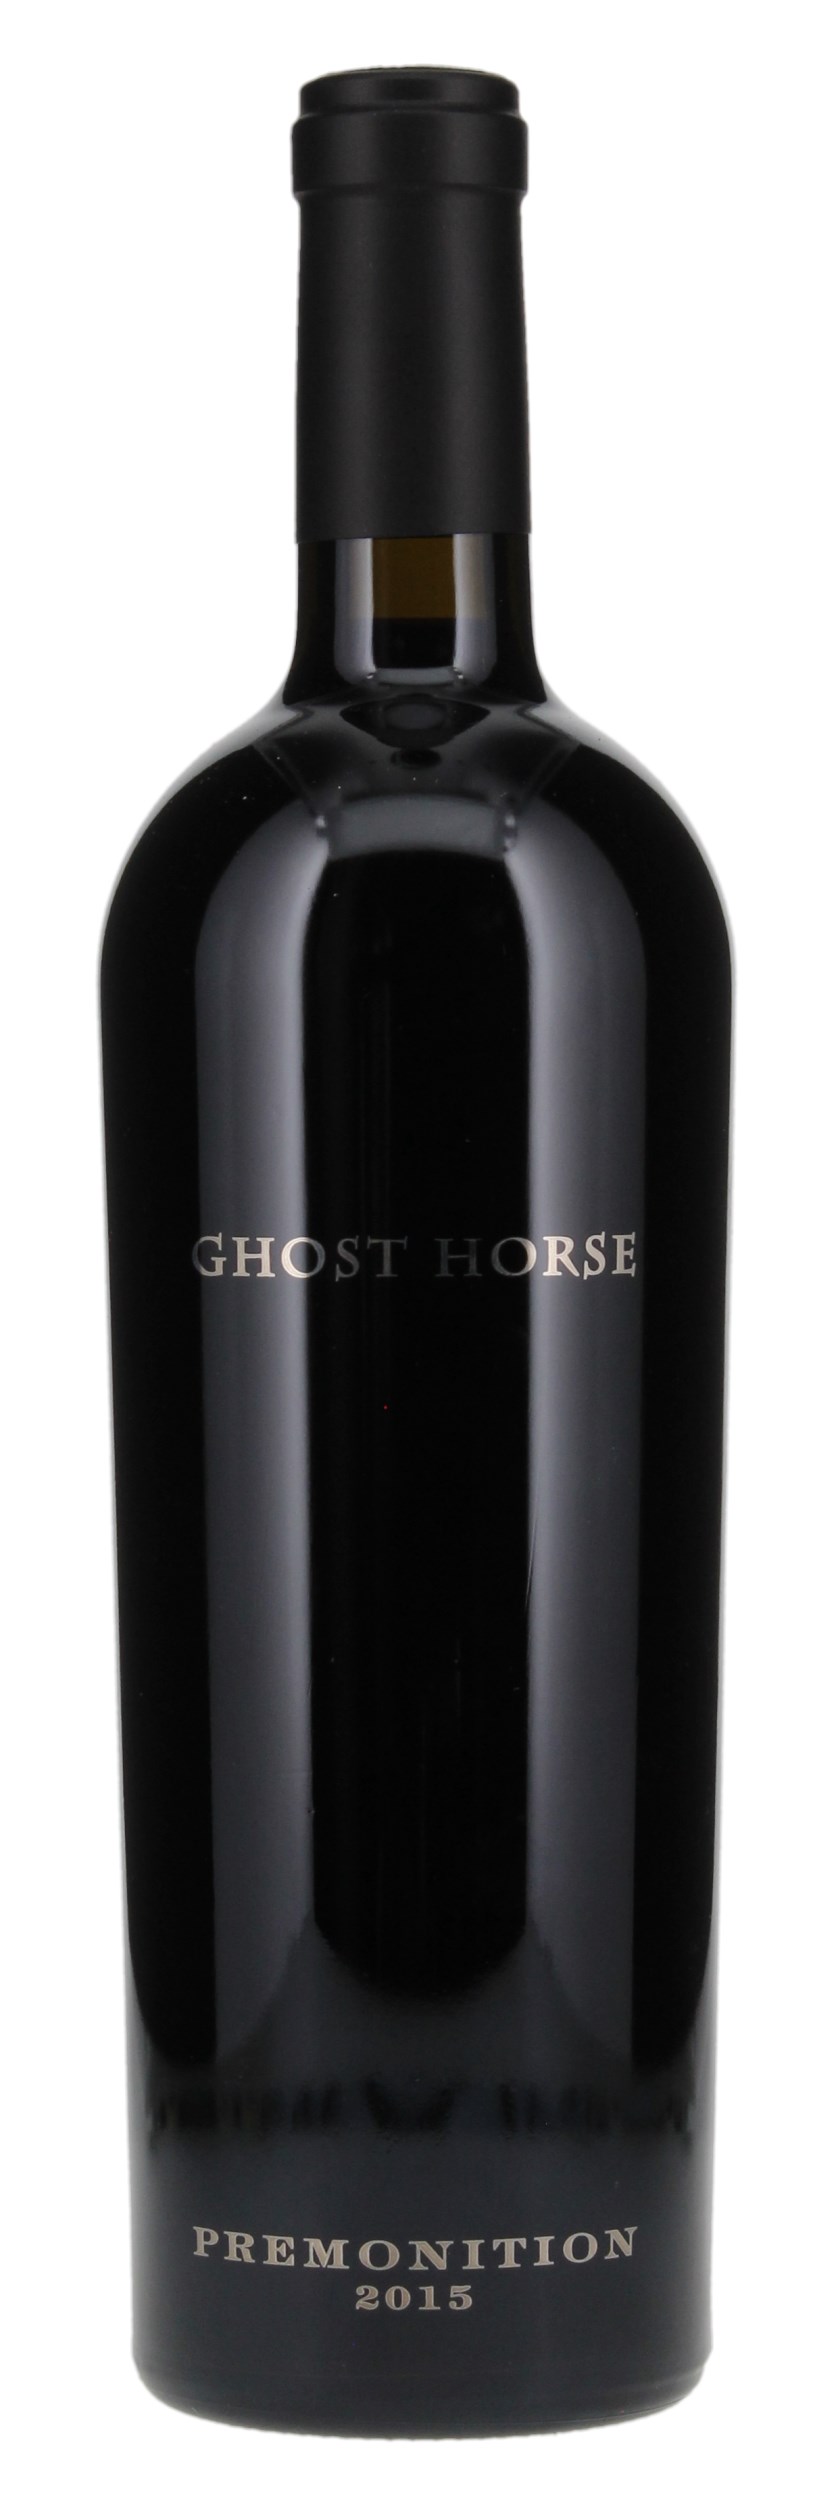 2015 Ghost Horse Vineyard Premonition Cabernet Sauvignon, 750ml